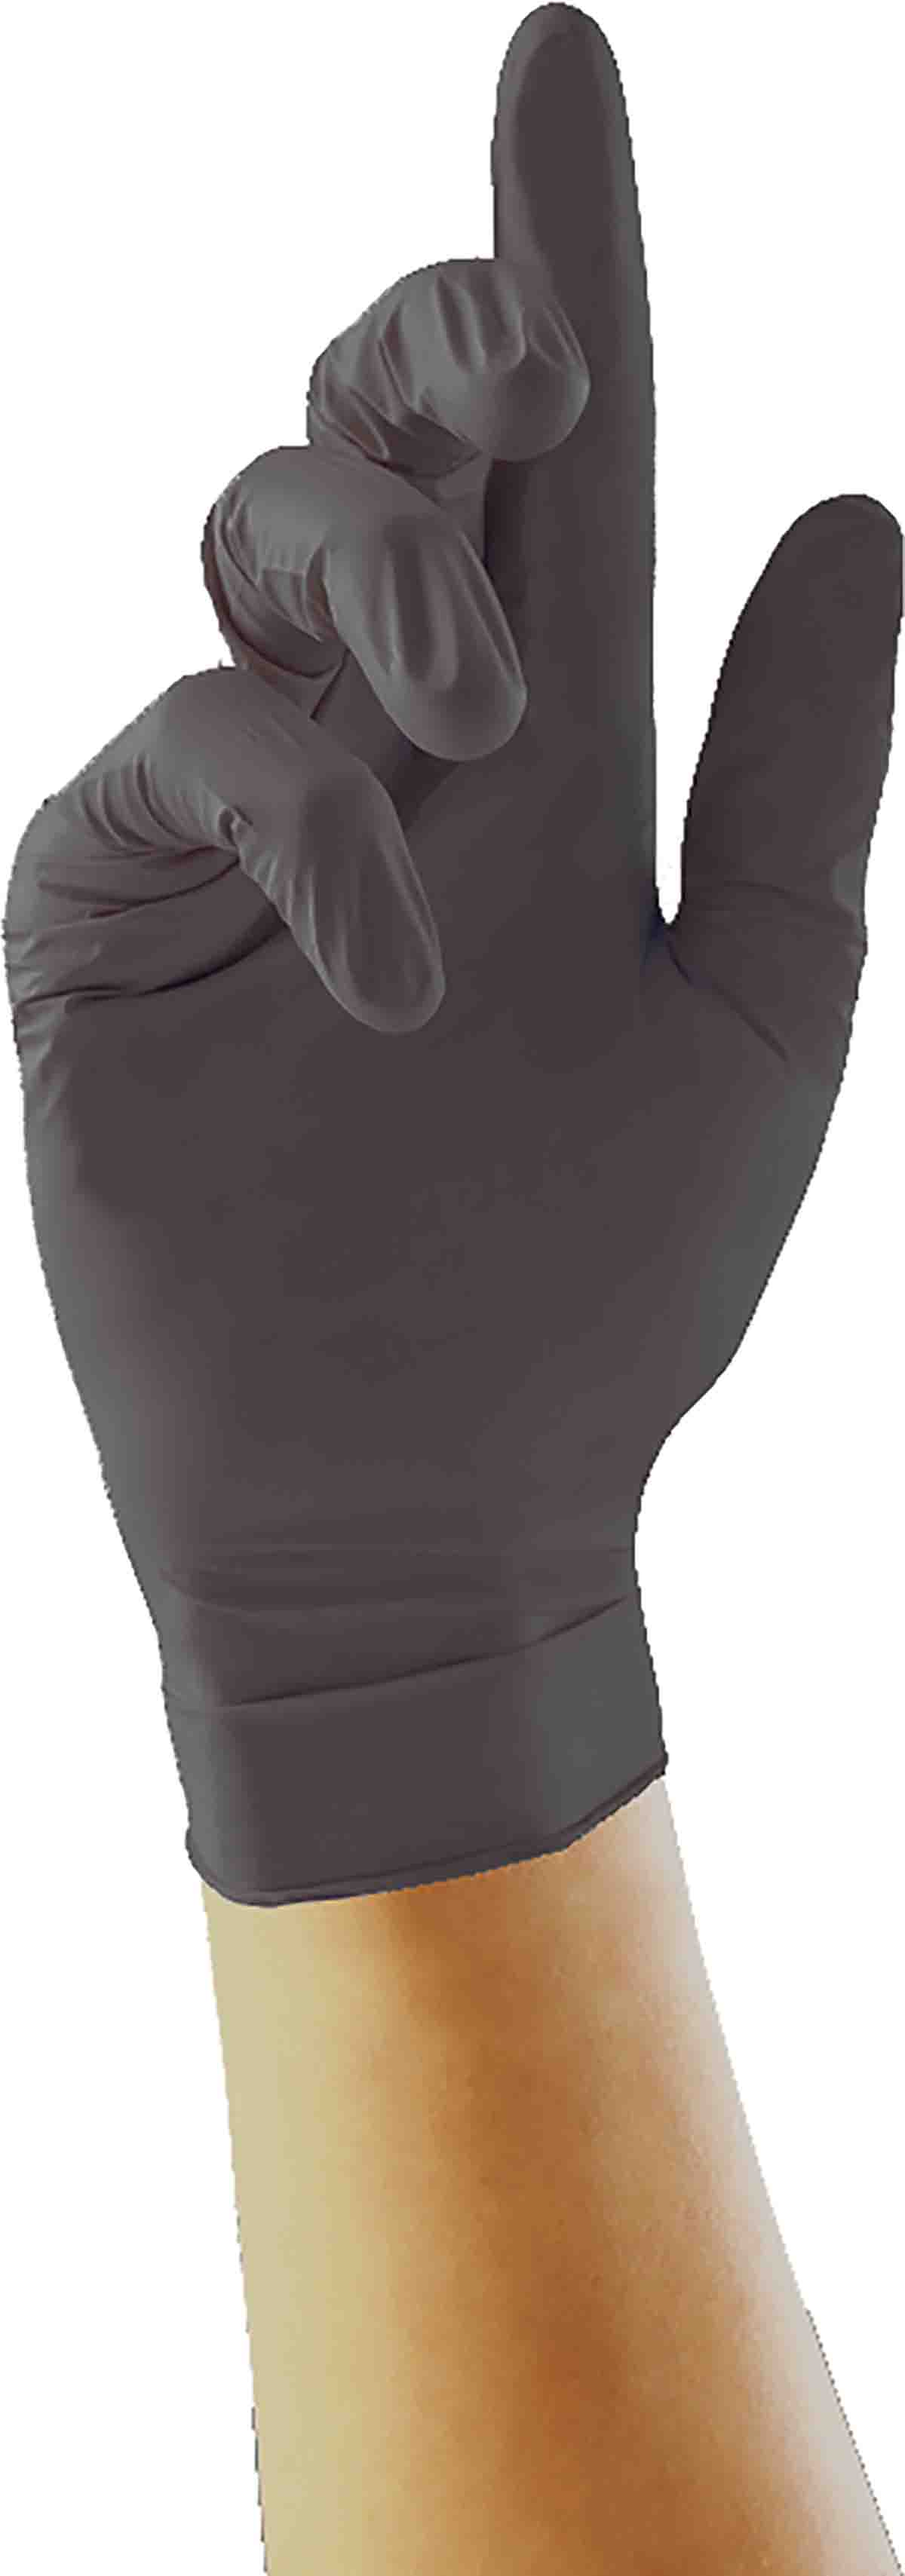 Uniglove Pearl Black Powder-Free Nitrile Disposable Gloves, Size 9, Large, Food Safe, 100 per Pack